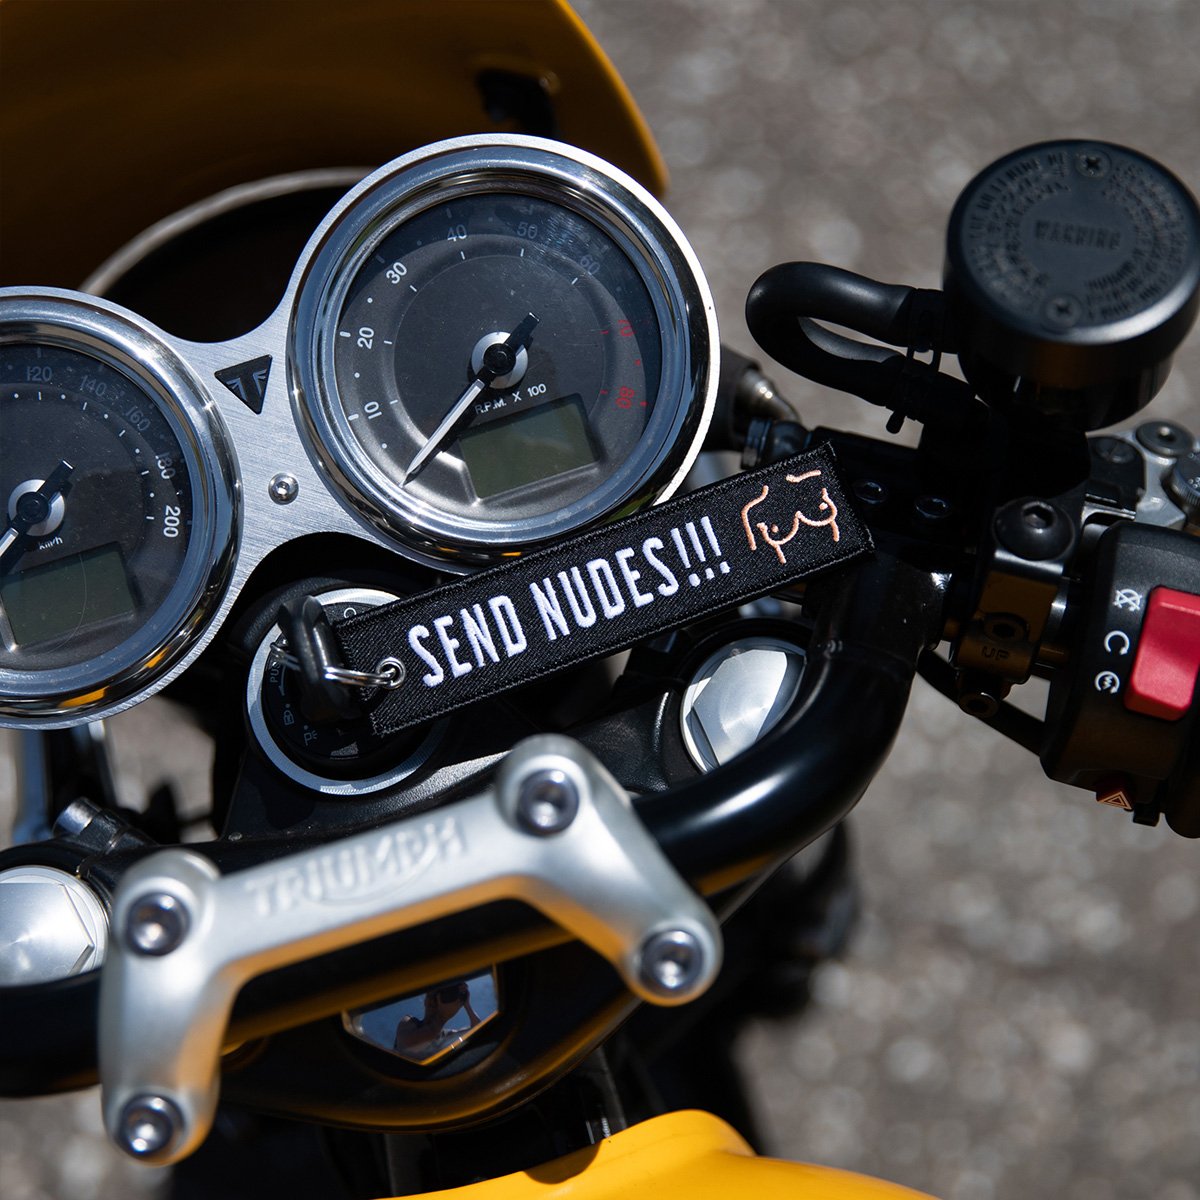 Send Nudes - Motorcycle Keychain | Moto Loot